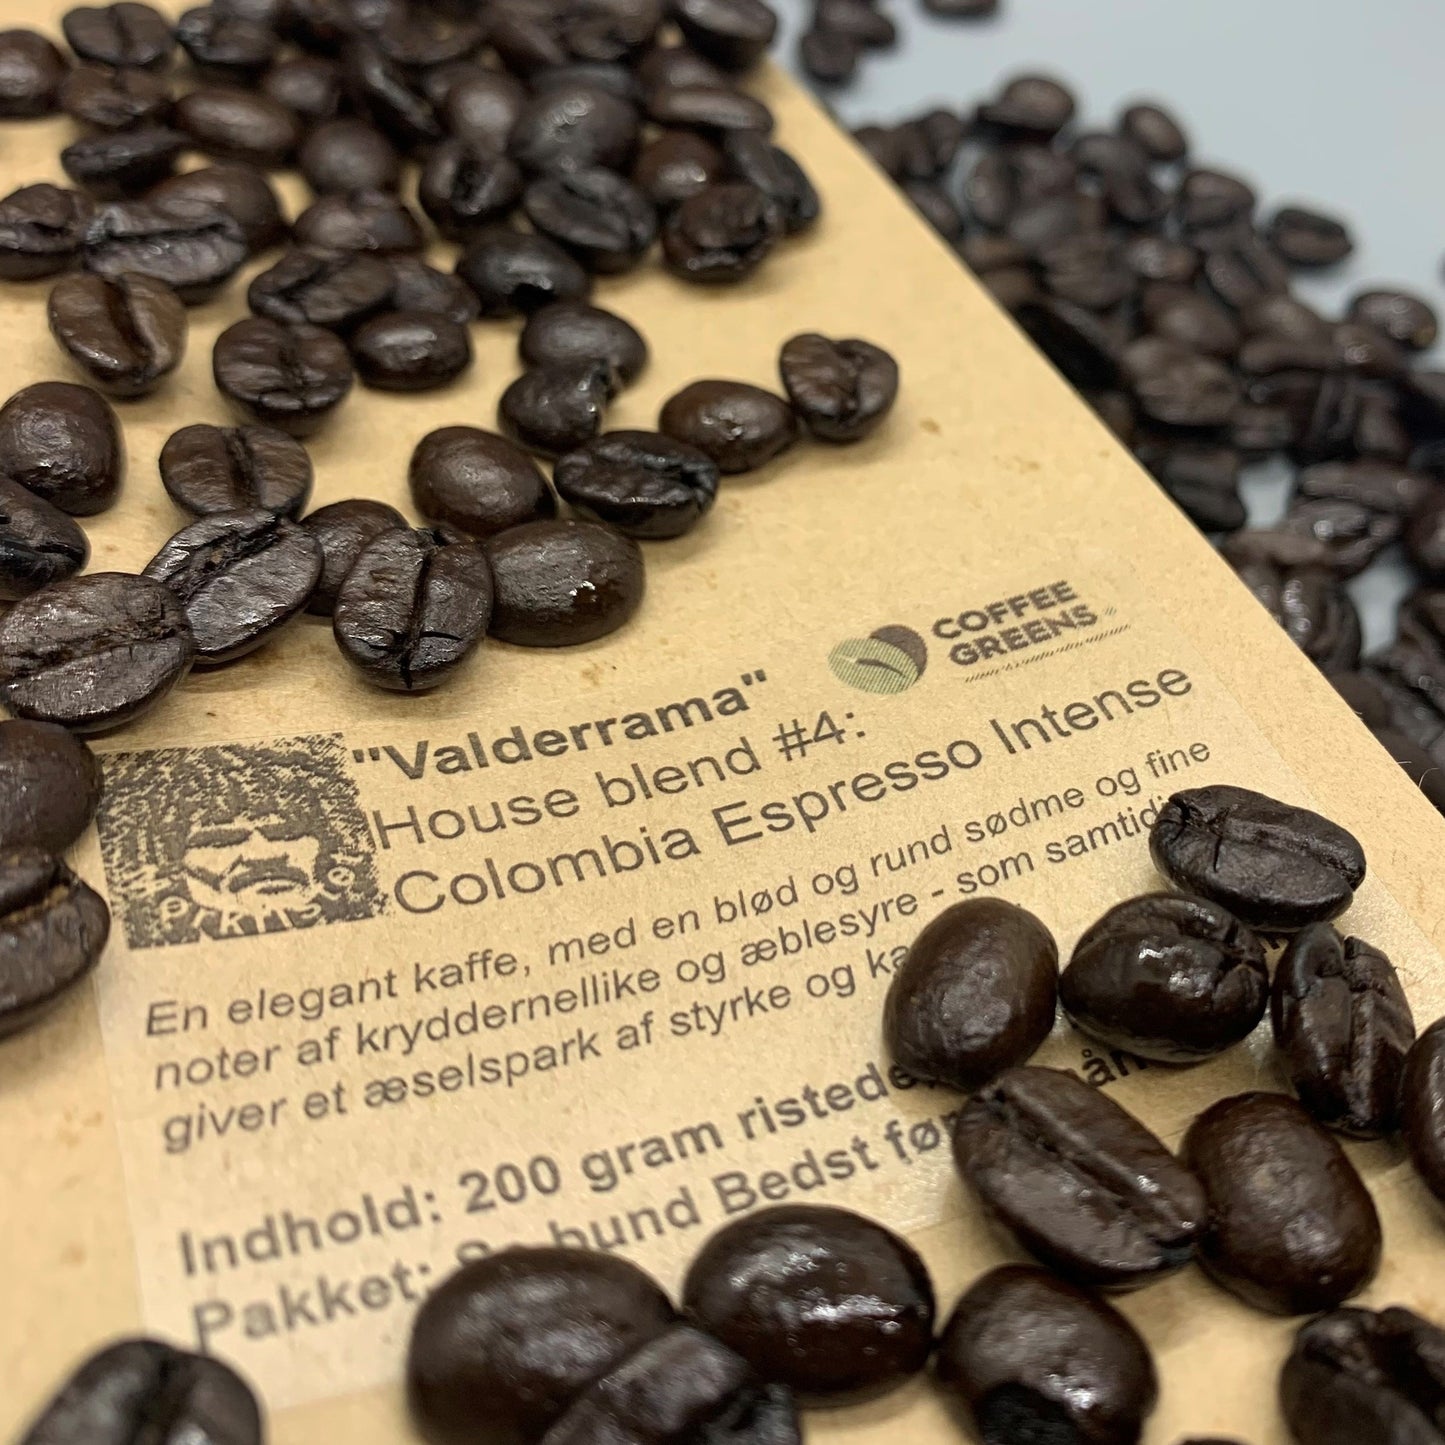 "Valderrama" - House blend #4: Colombia Espresso Intense - Ristede kaffebønner